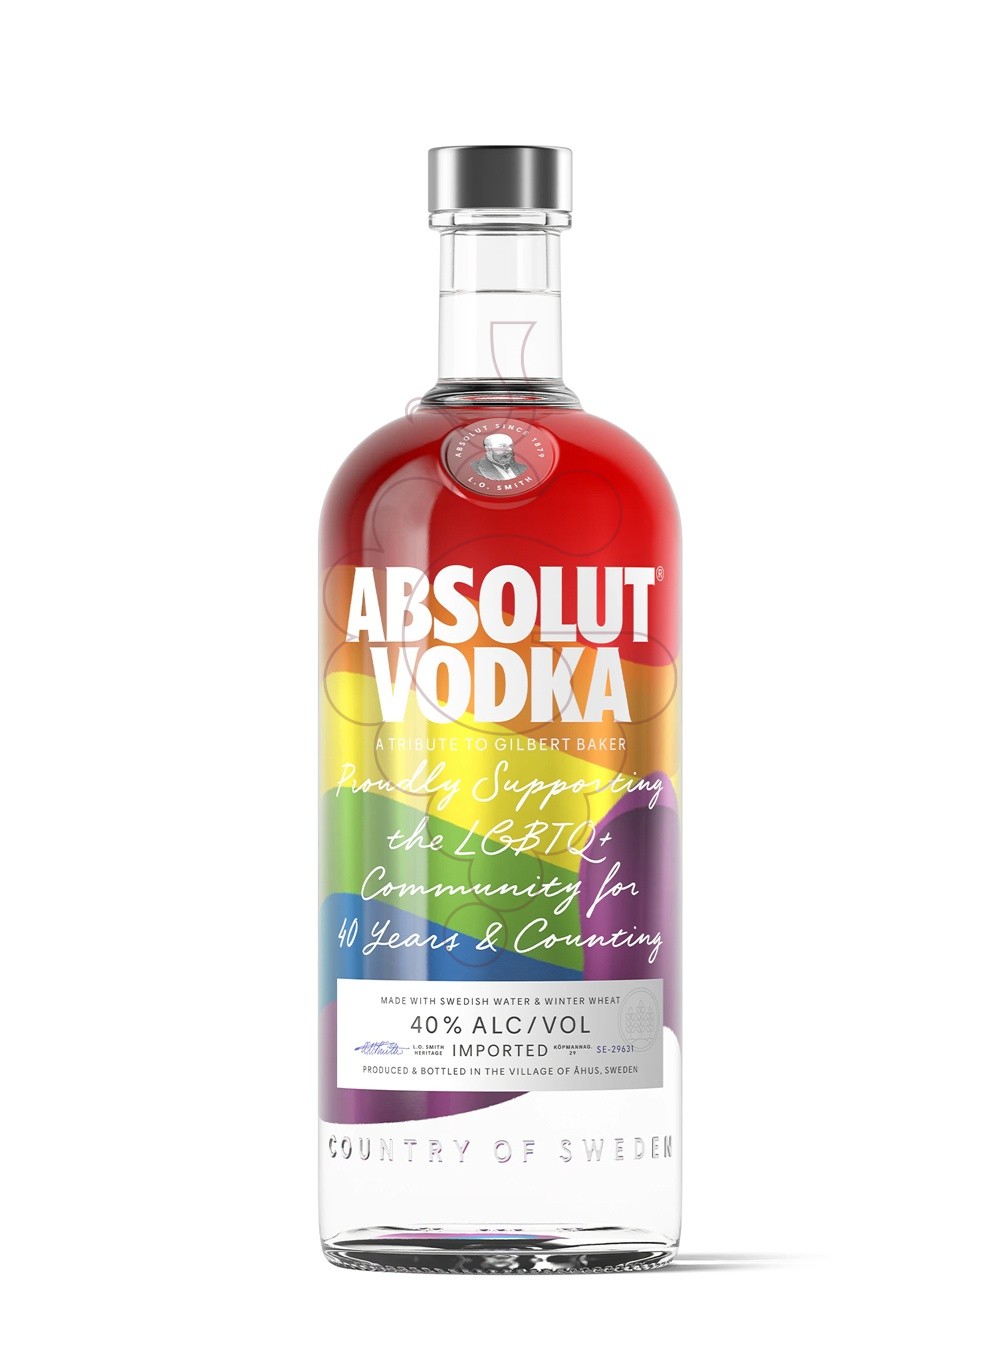 Foto Vodka Absolut Rainbow LGTBI Edition